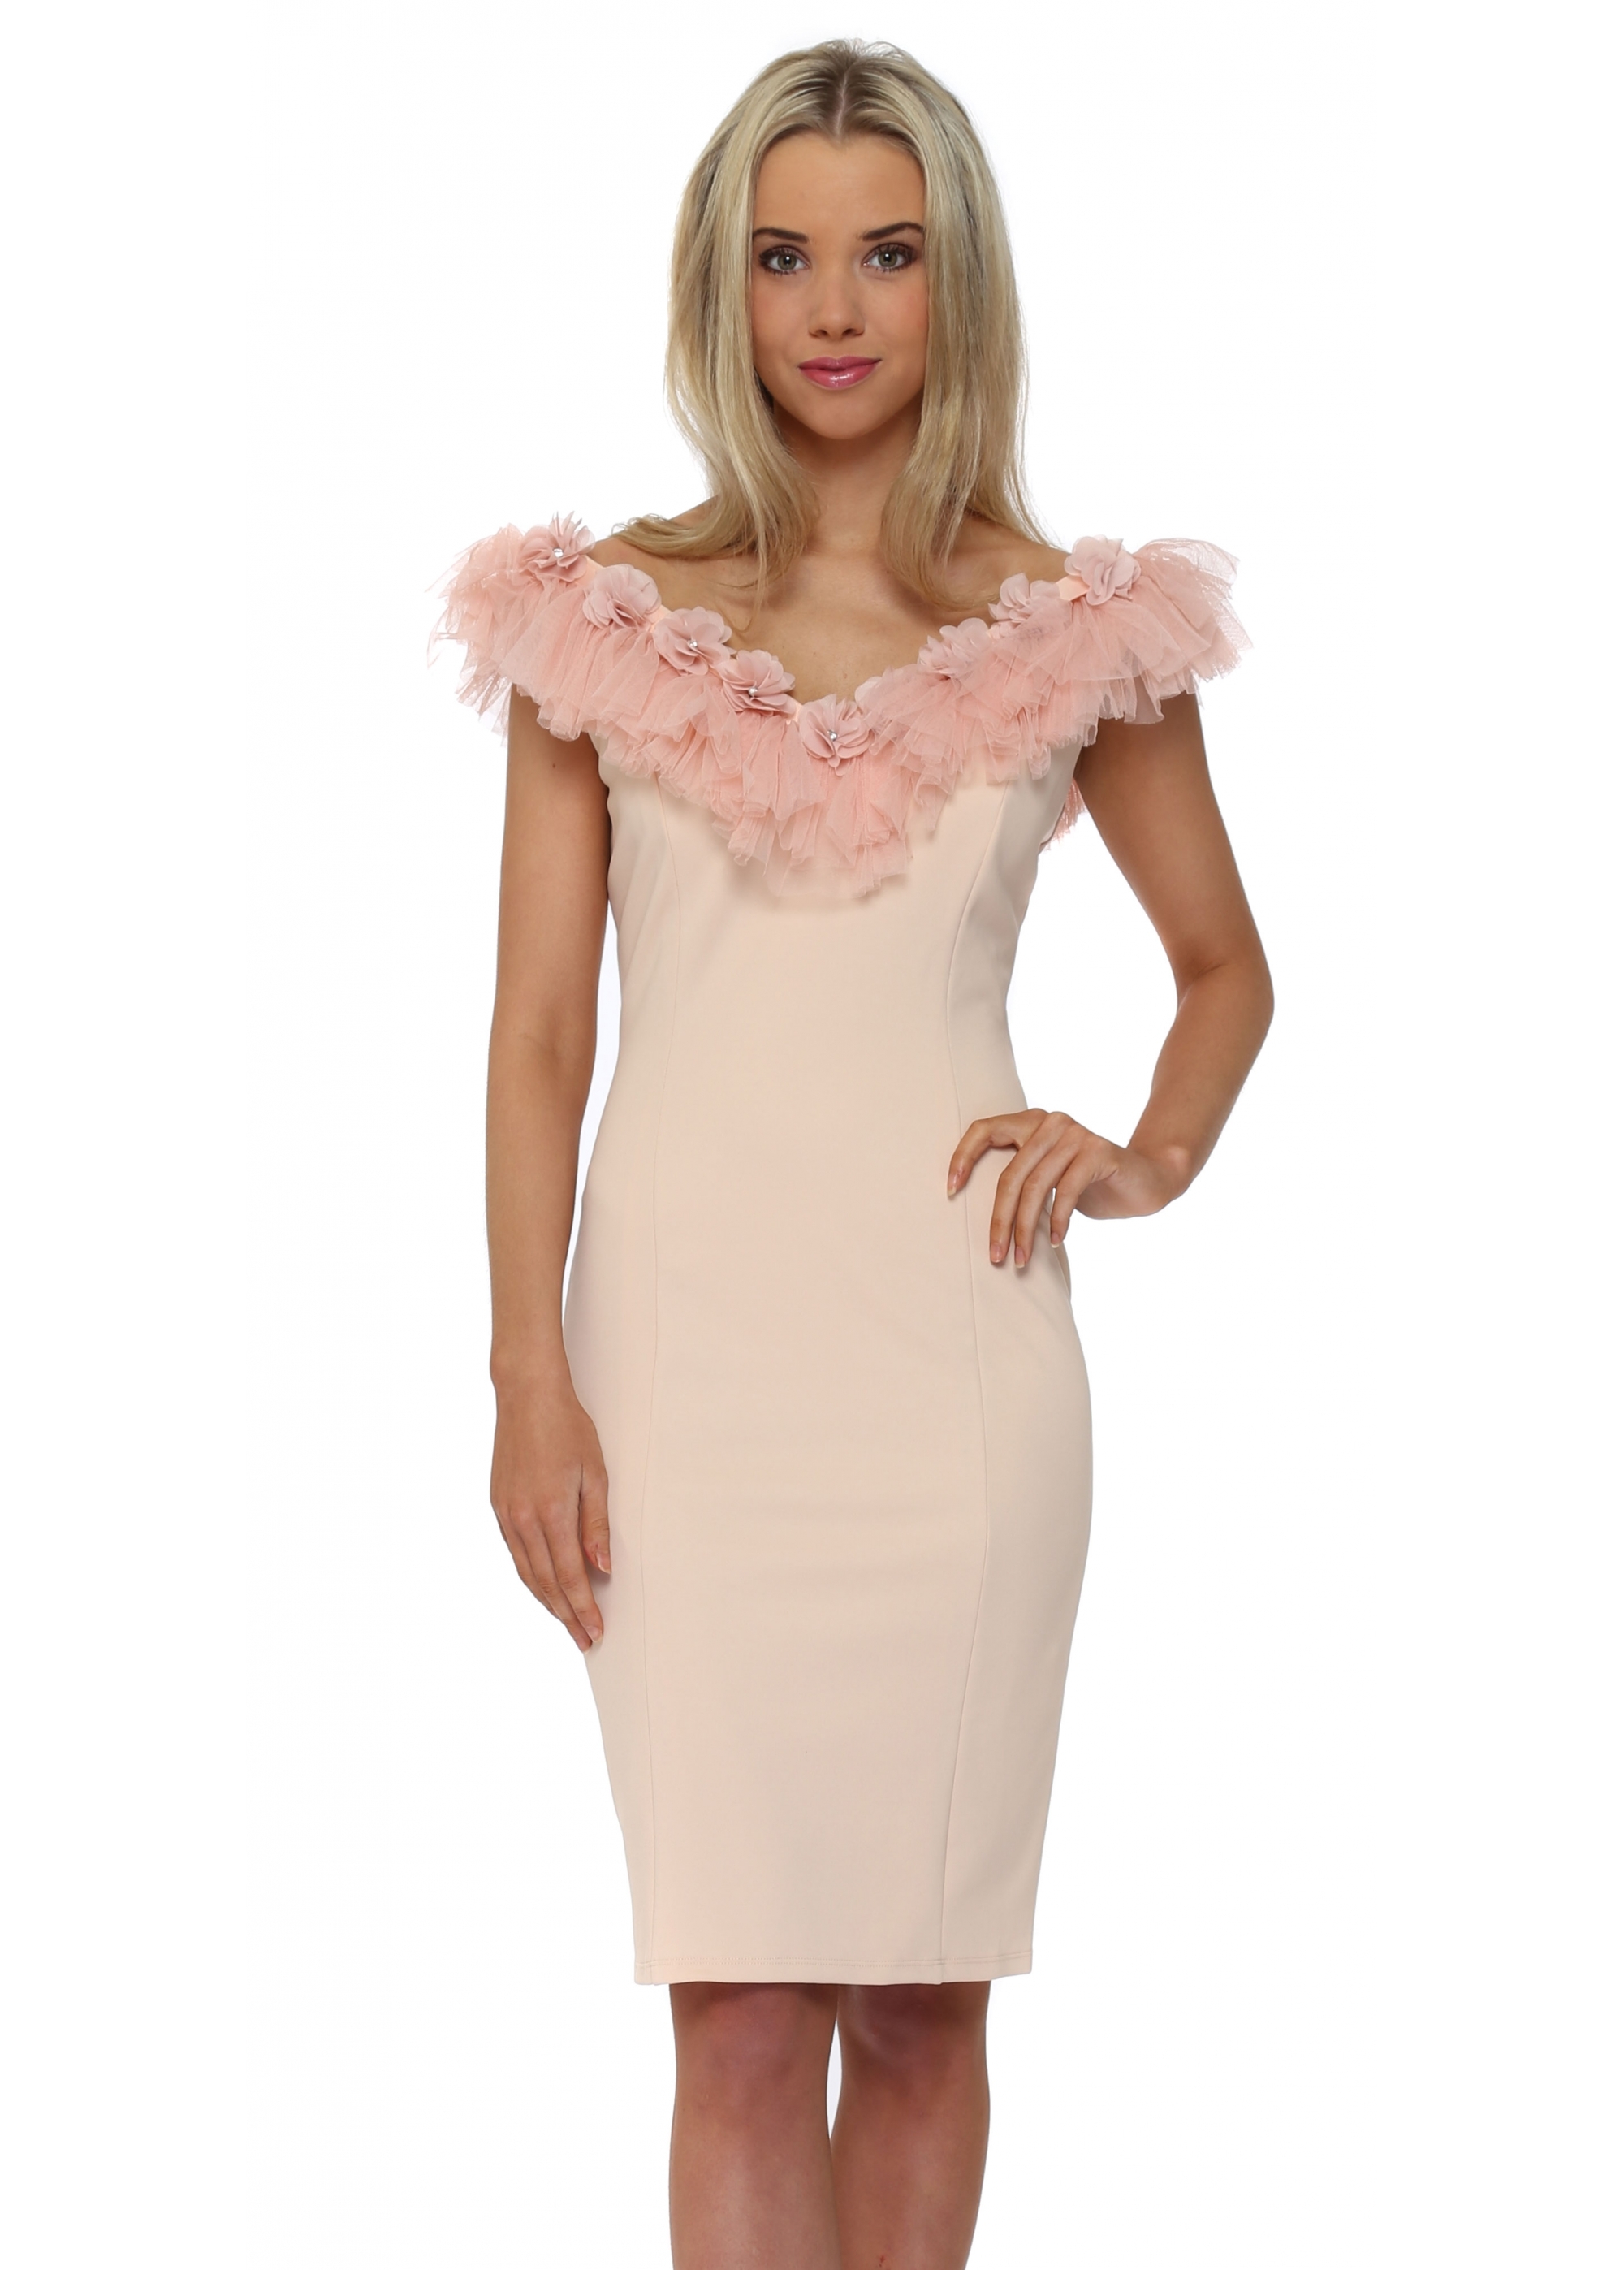 Poppy Flower Dress - Better Choice 2017